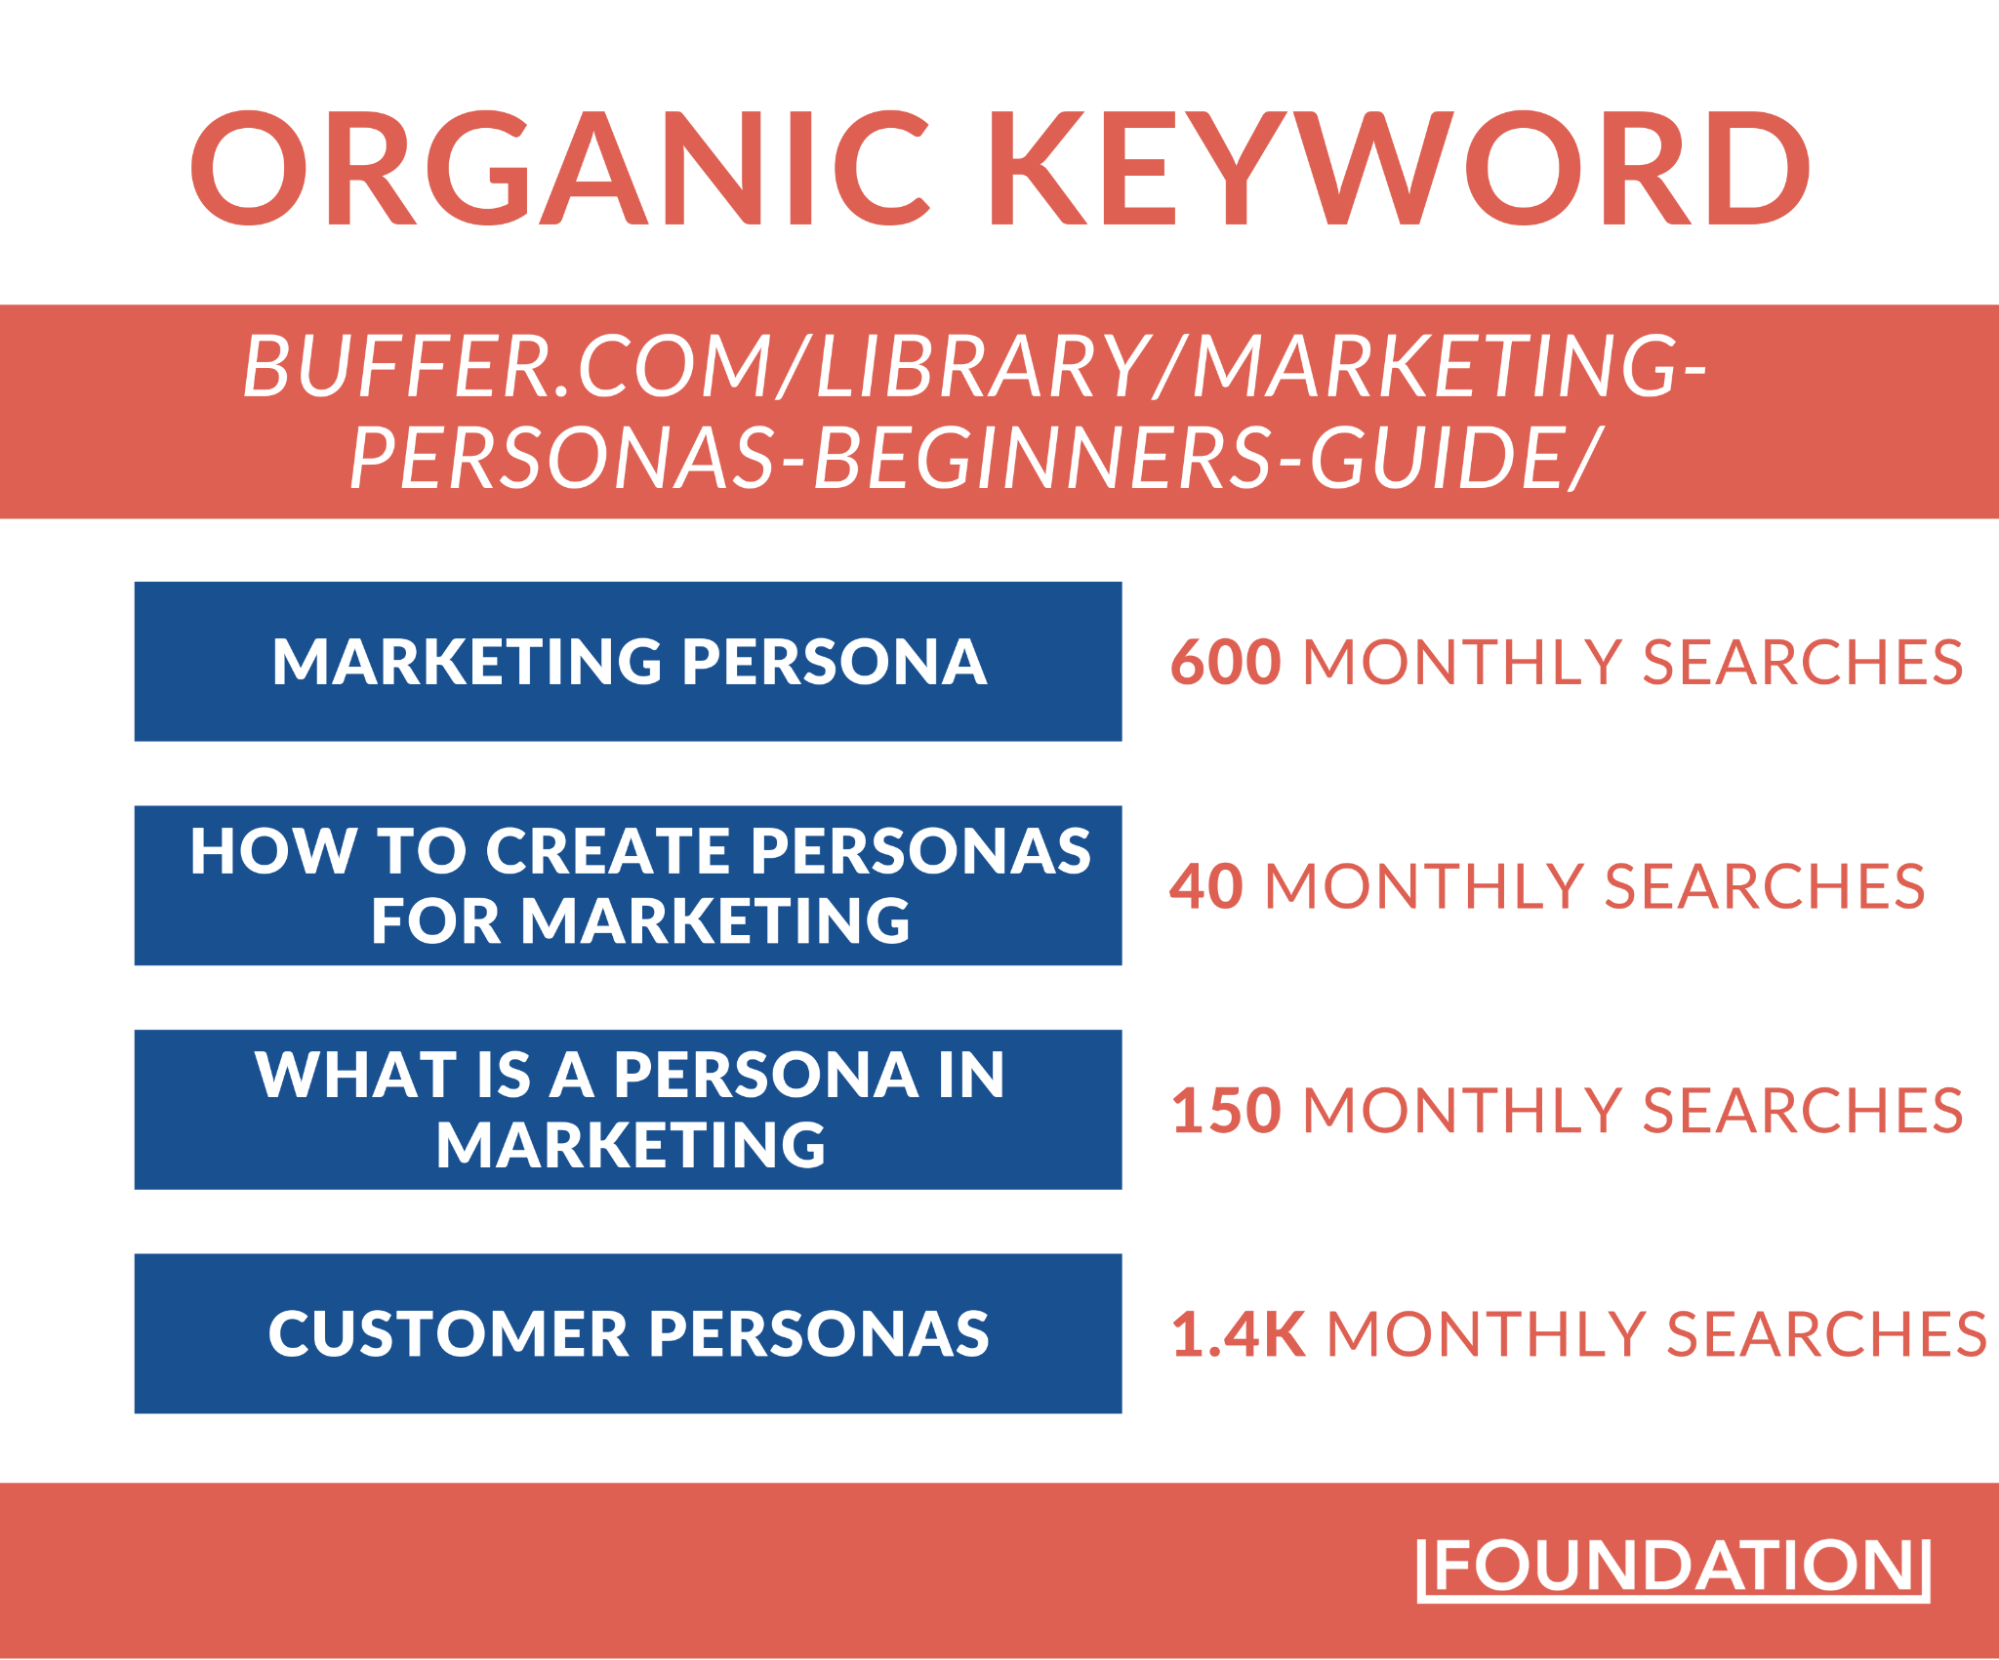 Buffer Marketing Persona Guide - Organic Keywords